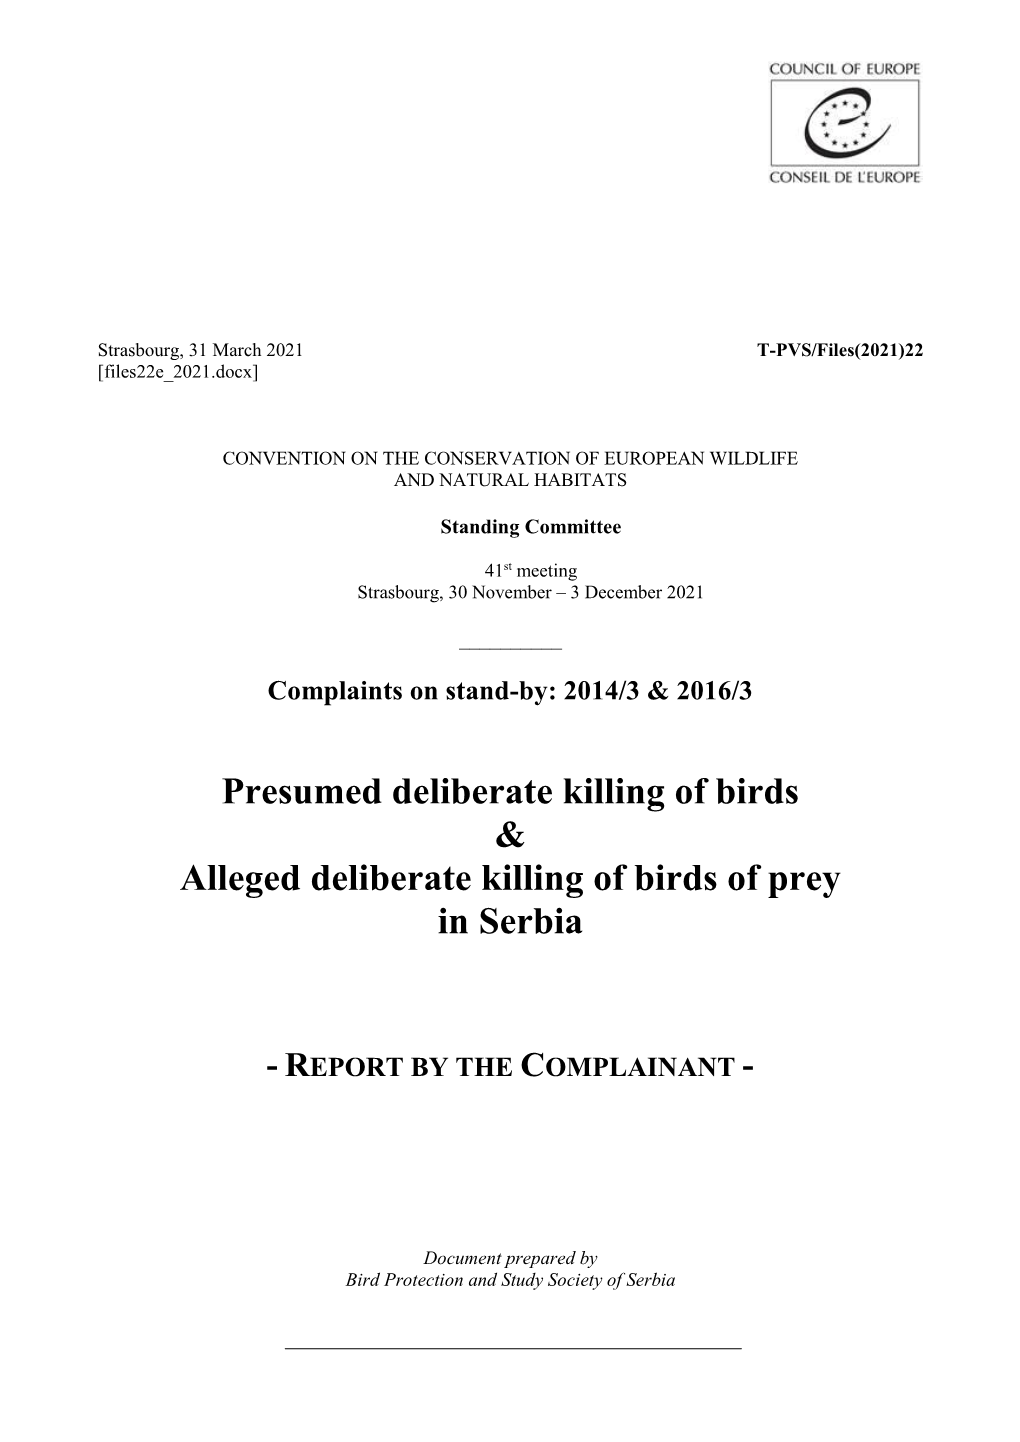 Presumed Deliberate Killing of Birds & Alleged Deliberate Killing of Birds Of